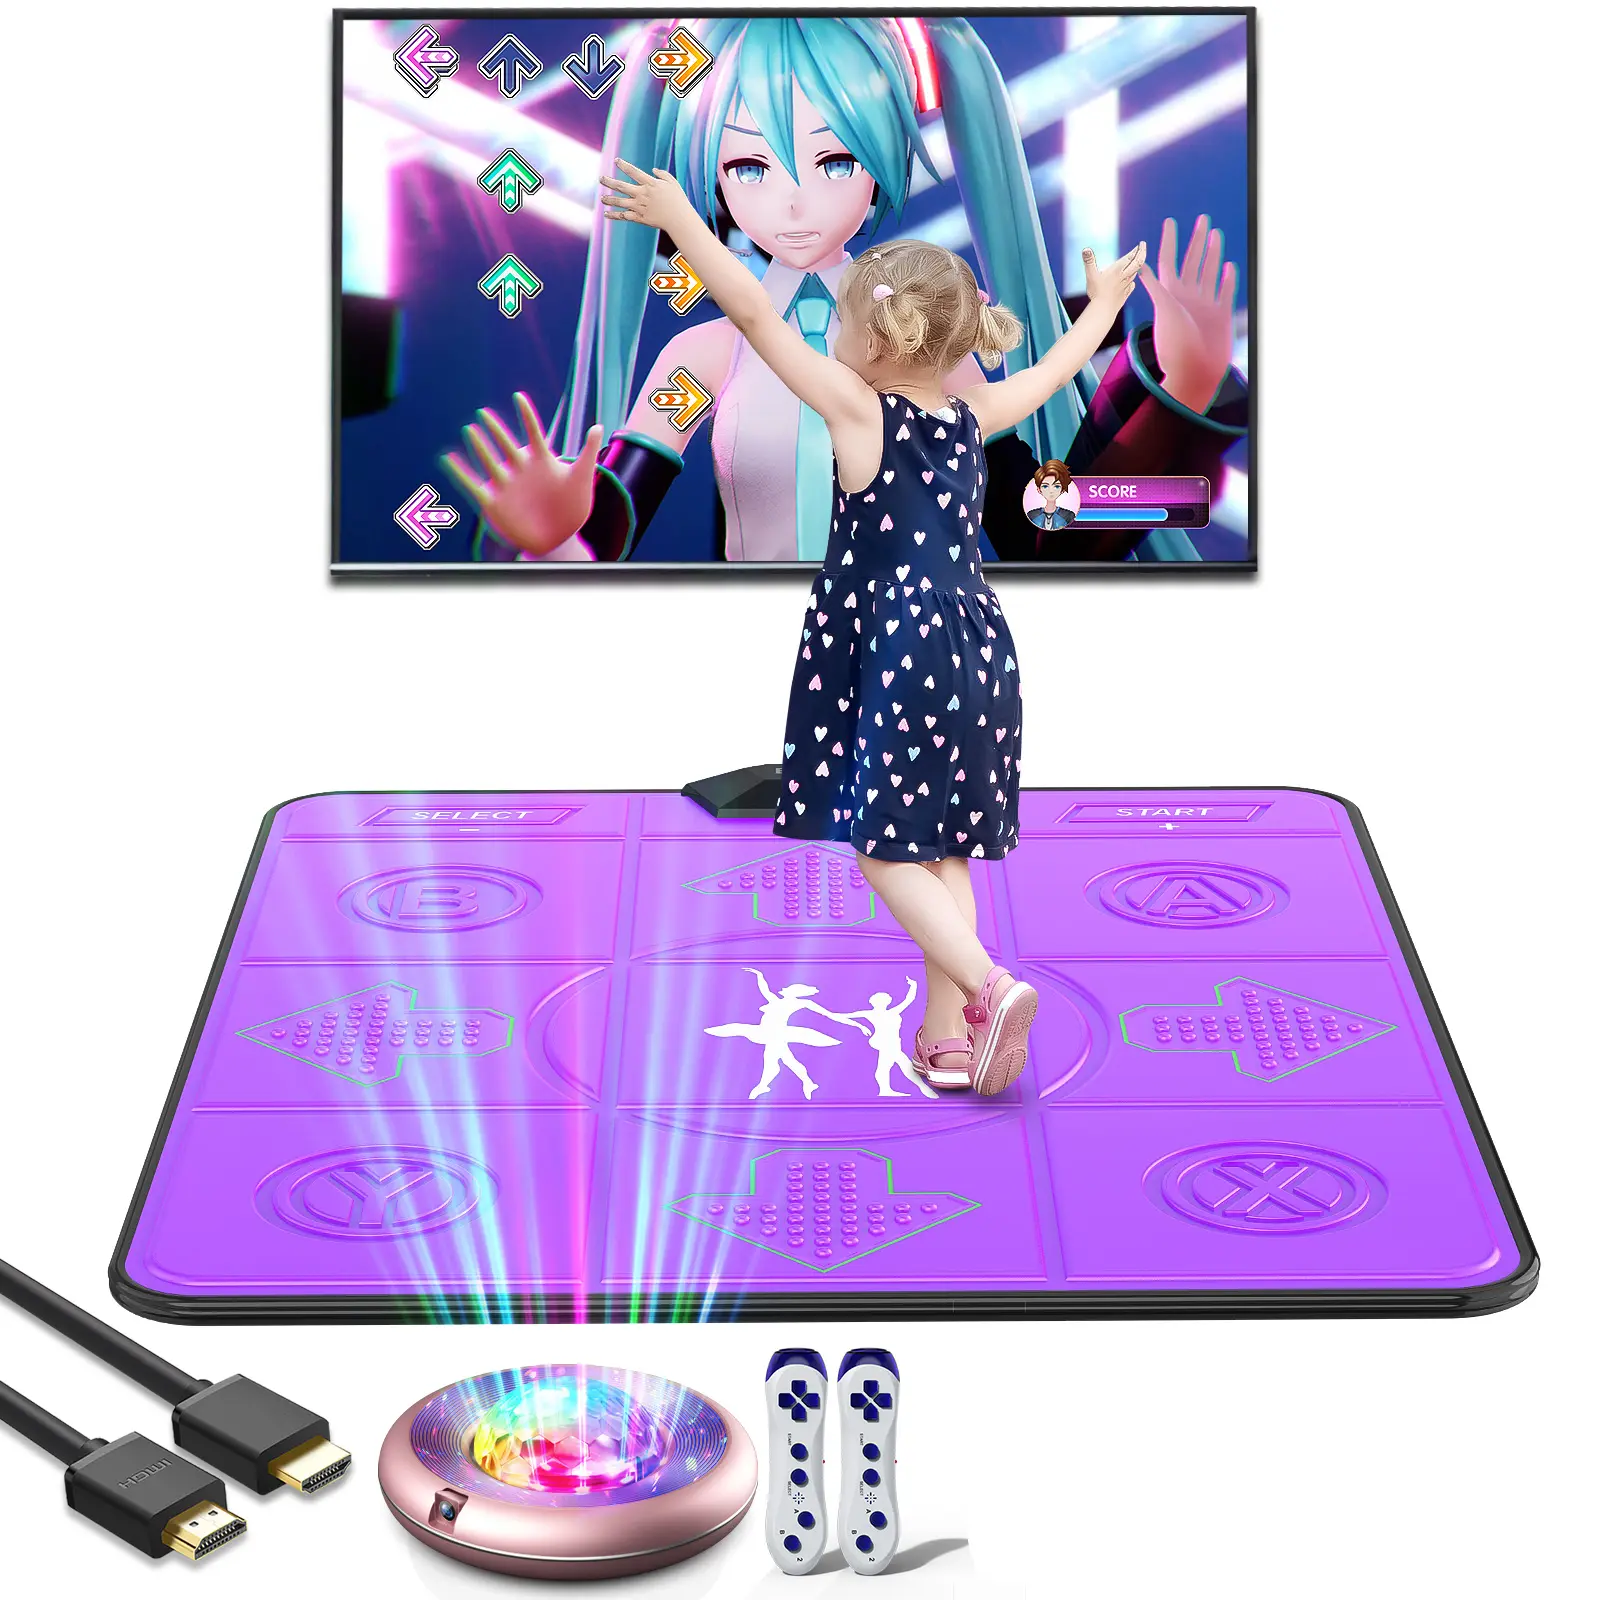 HDMI TV Computer Wireless Dance Mat Game for Adult Kids Boys Girls Dance Floor Portable Musical Blanket Pad